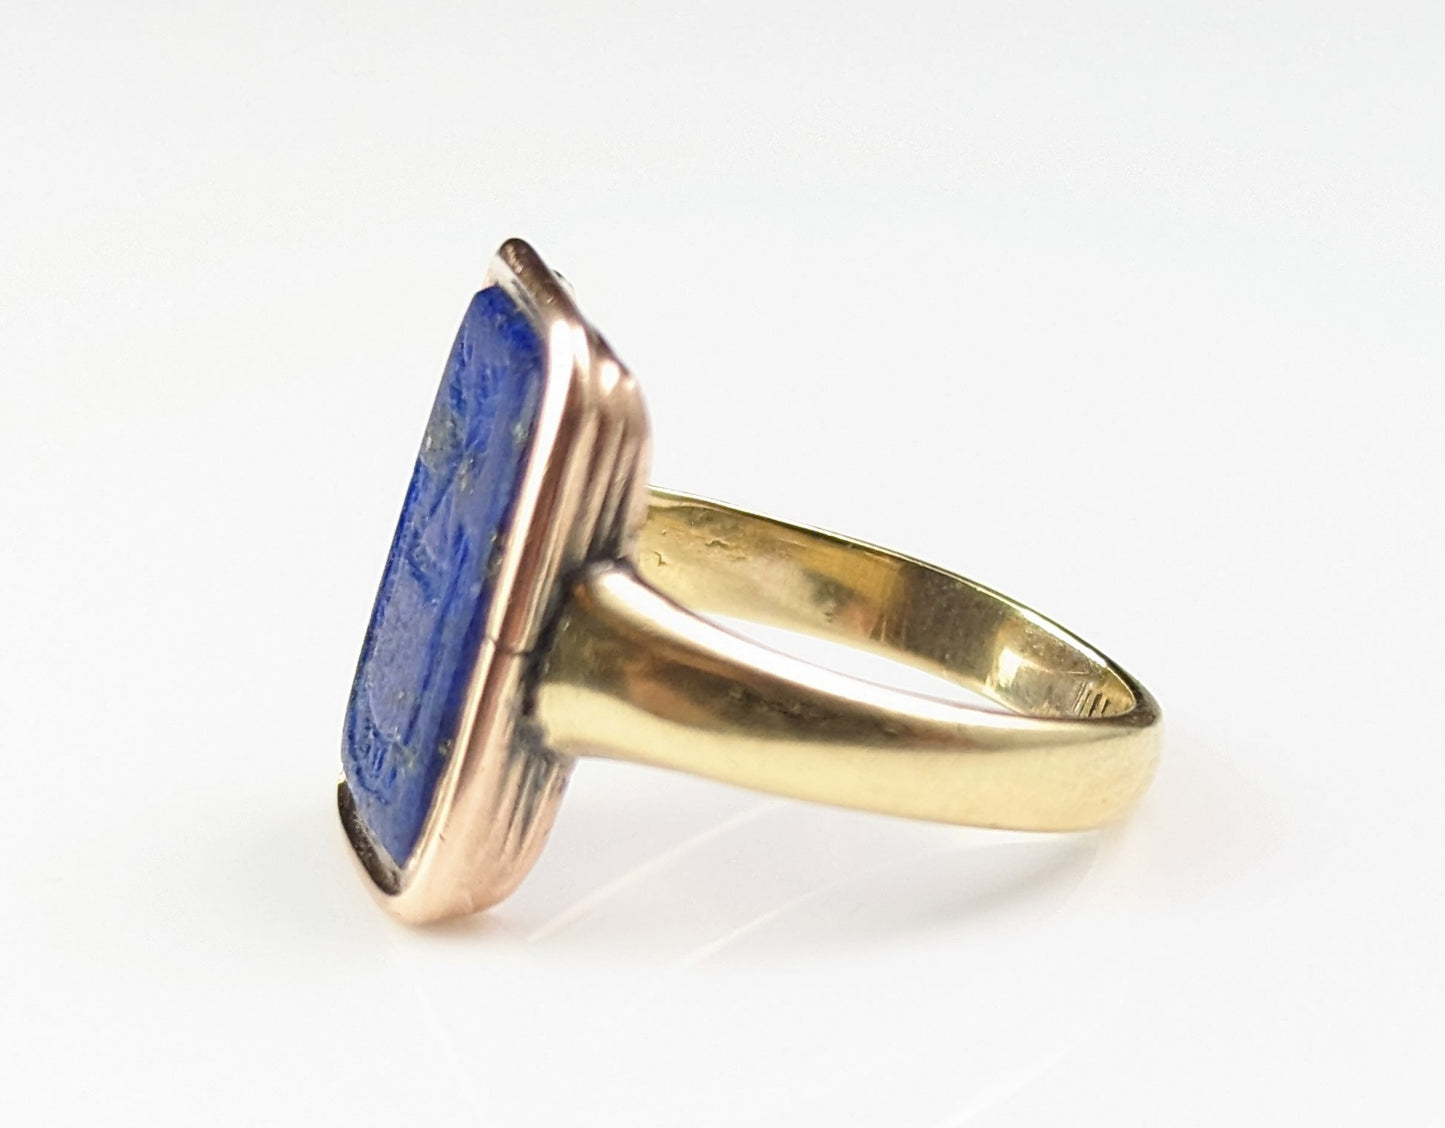 Antique Georgian Lapis Lazuli intaglio seal ring, 15ct gold, Signet ring